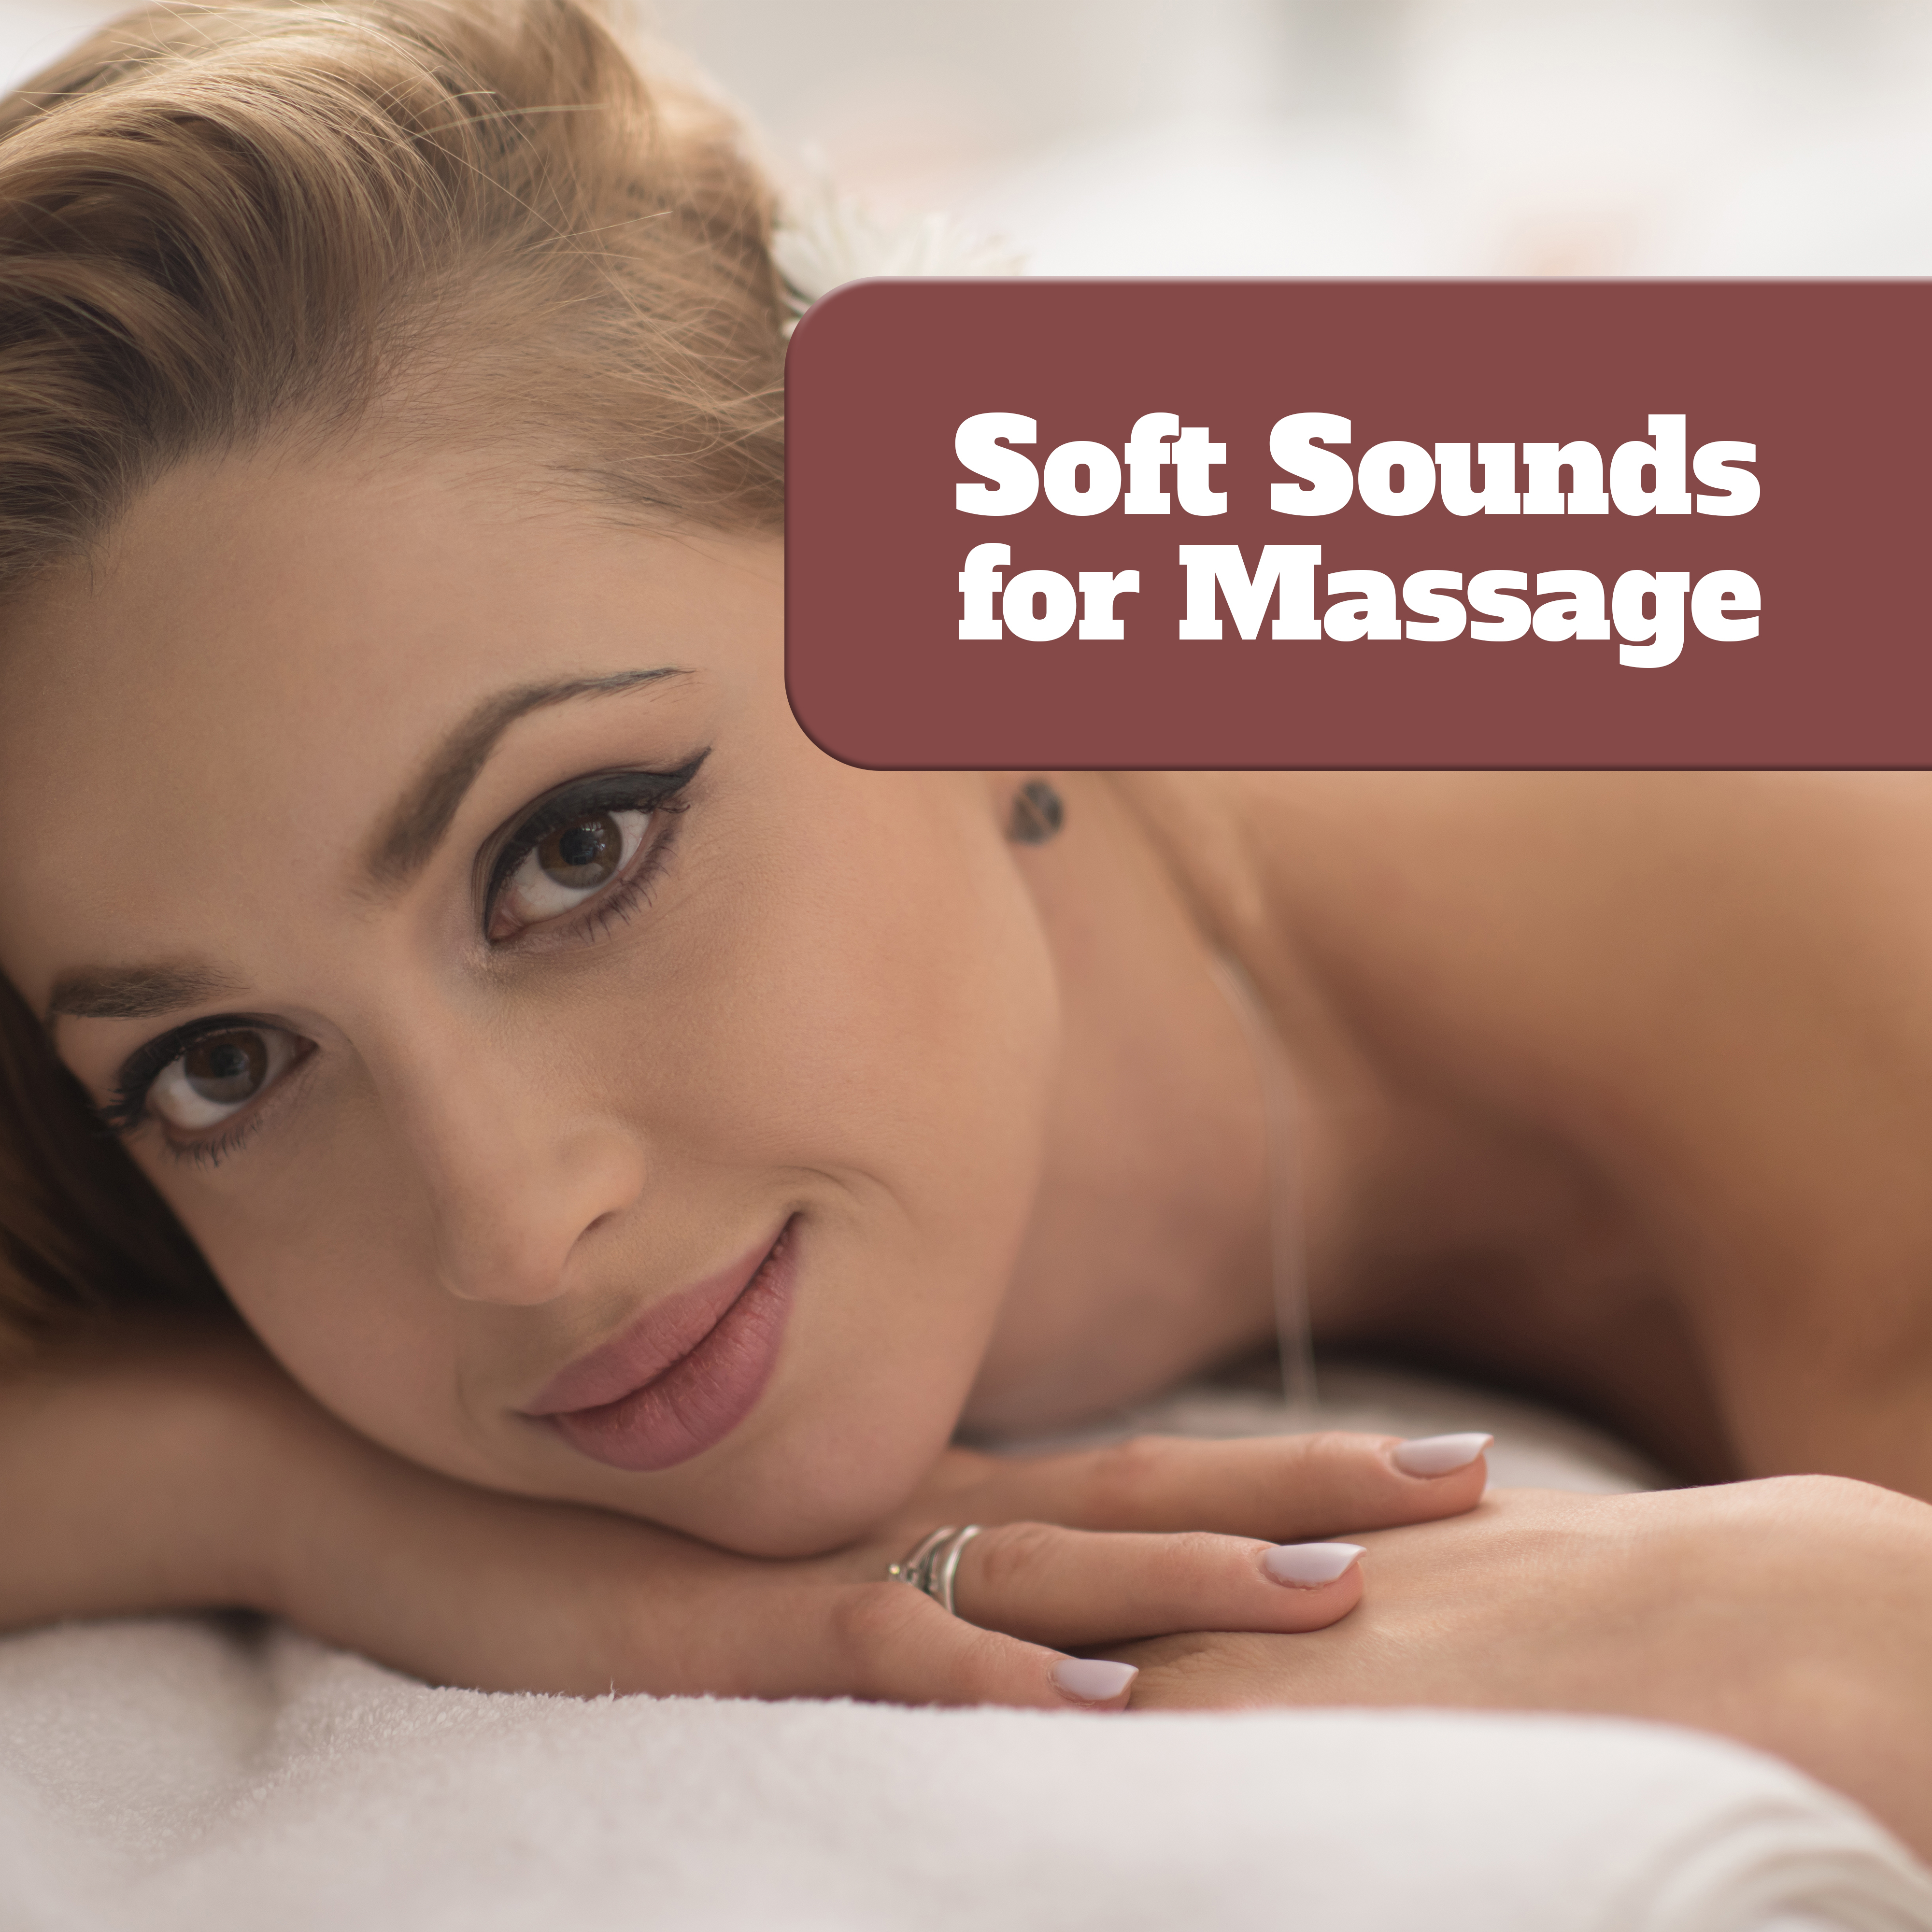 Soft Sounds for Massage